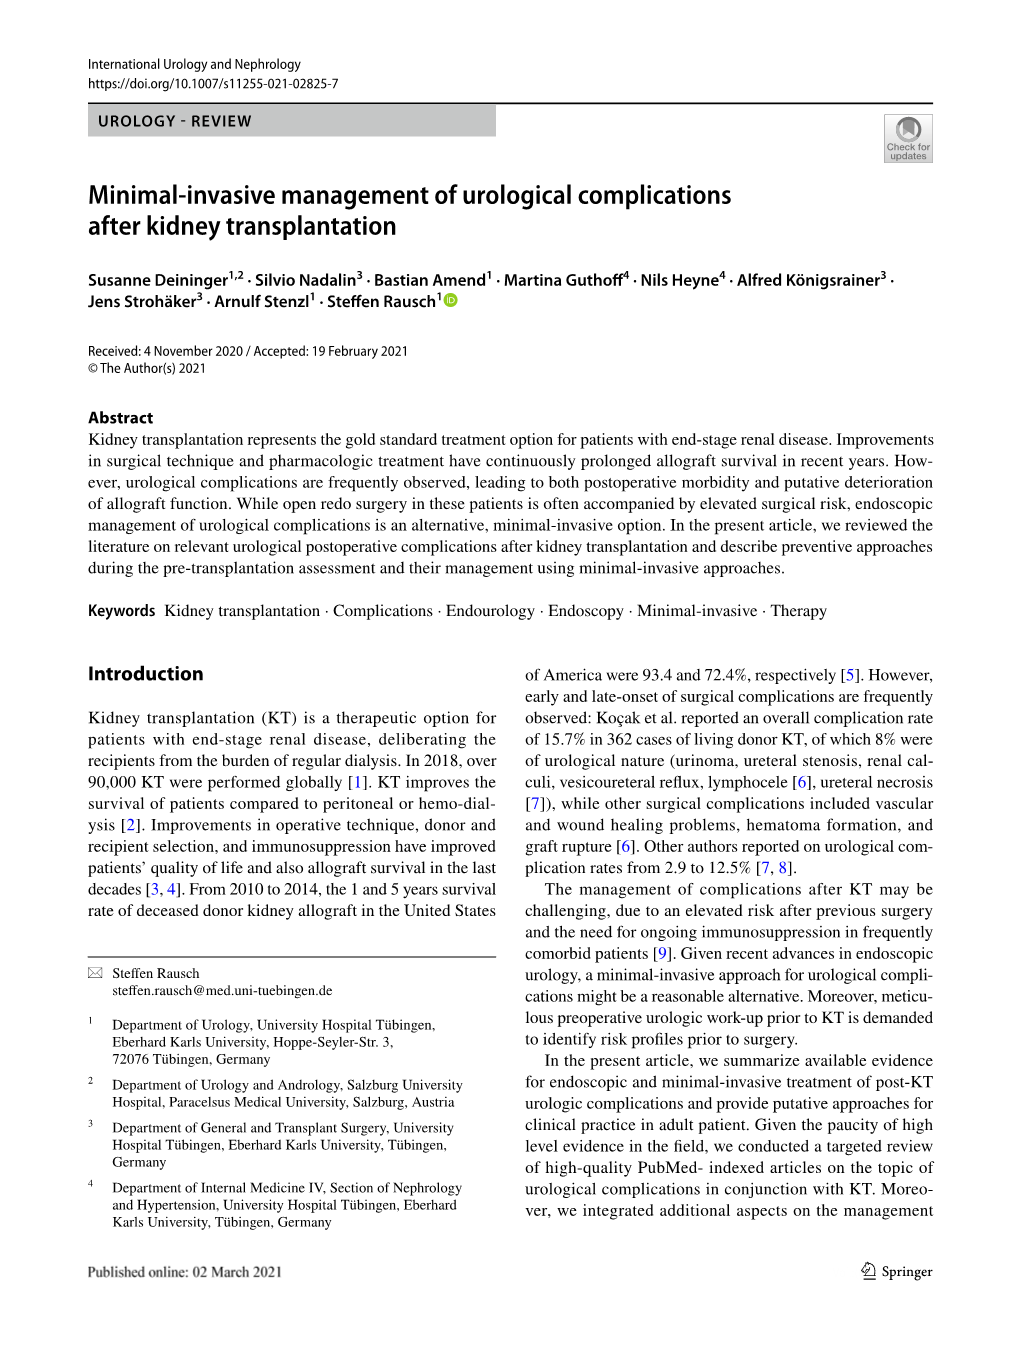 Minimal-Invasive Management of Urological Complications After